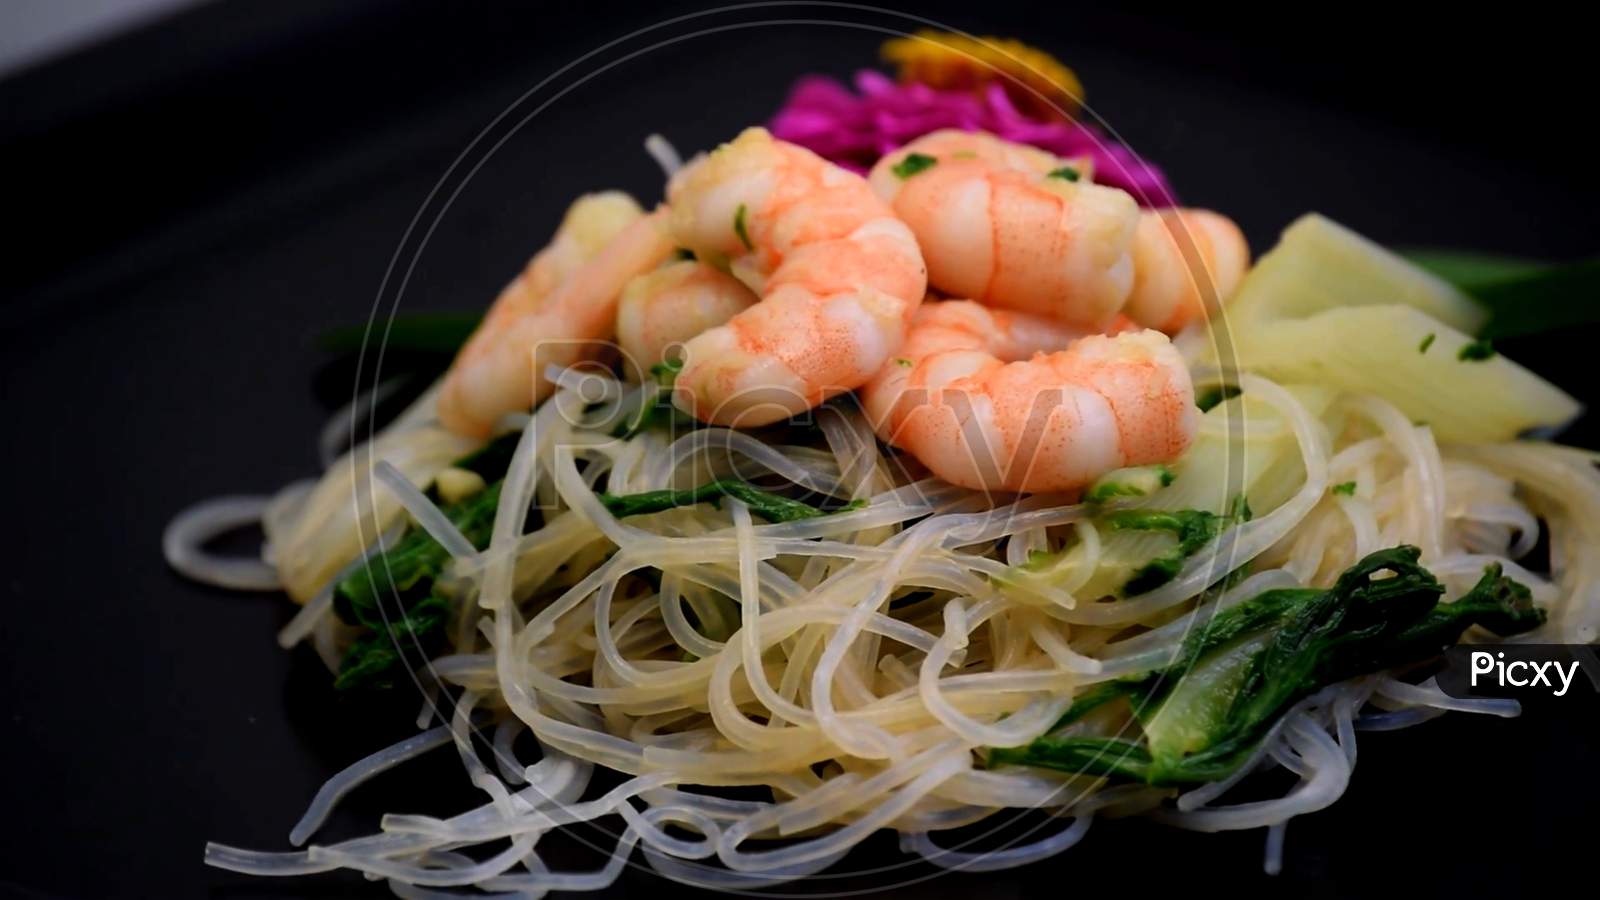 Shrimp Food Stock Images